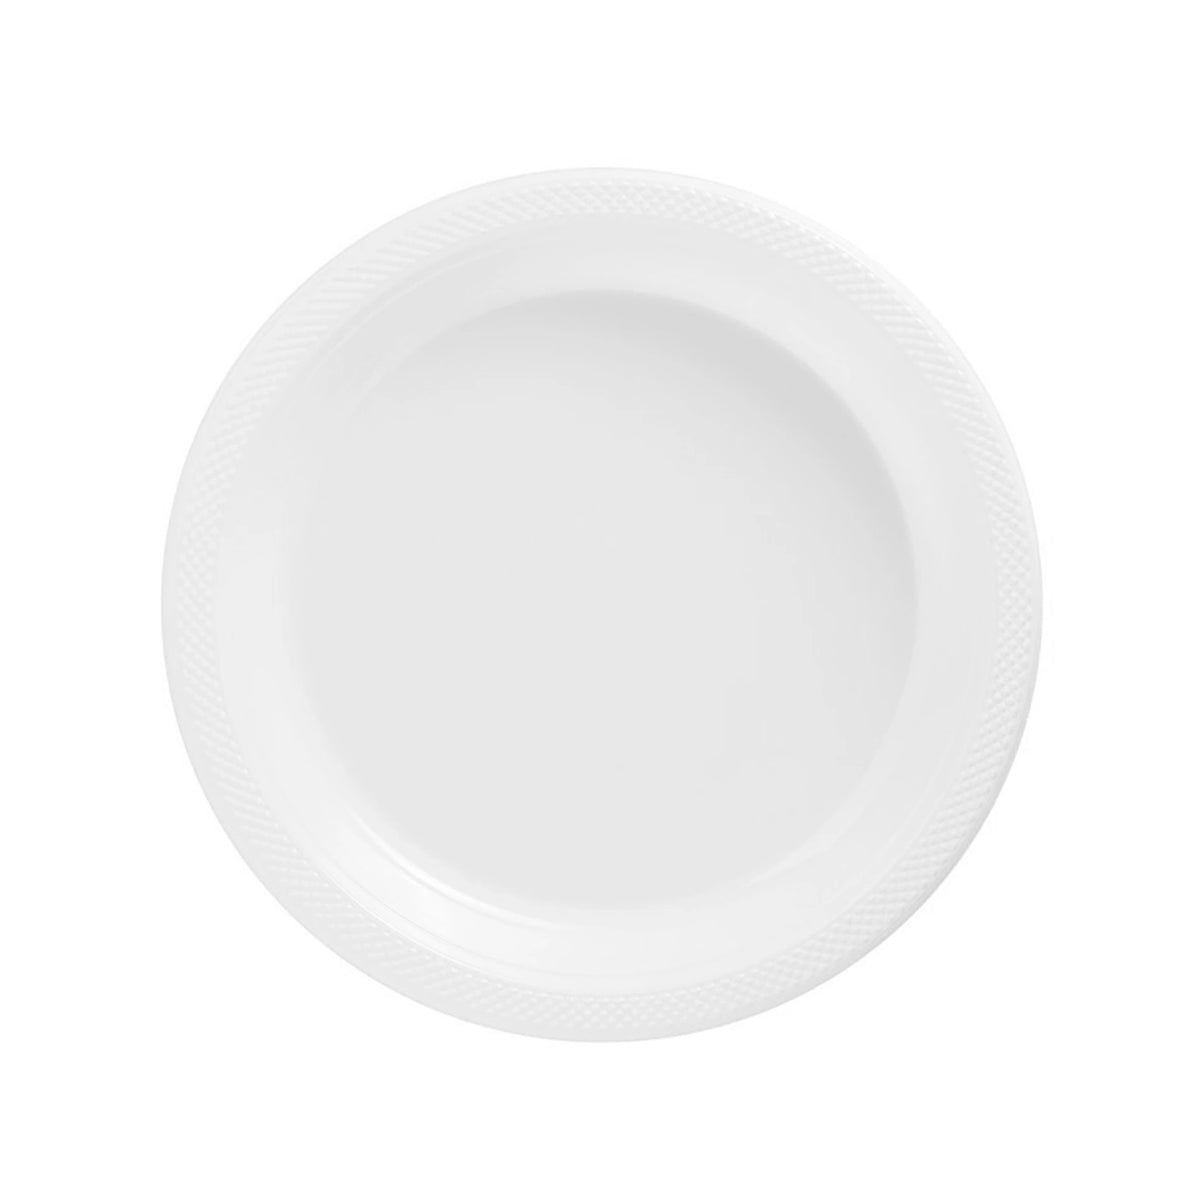 Plate 20 pieces White 22 cm